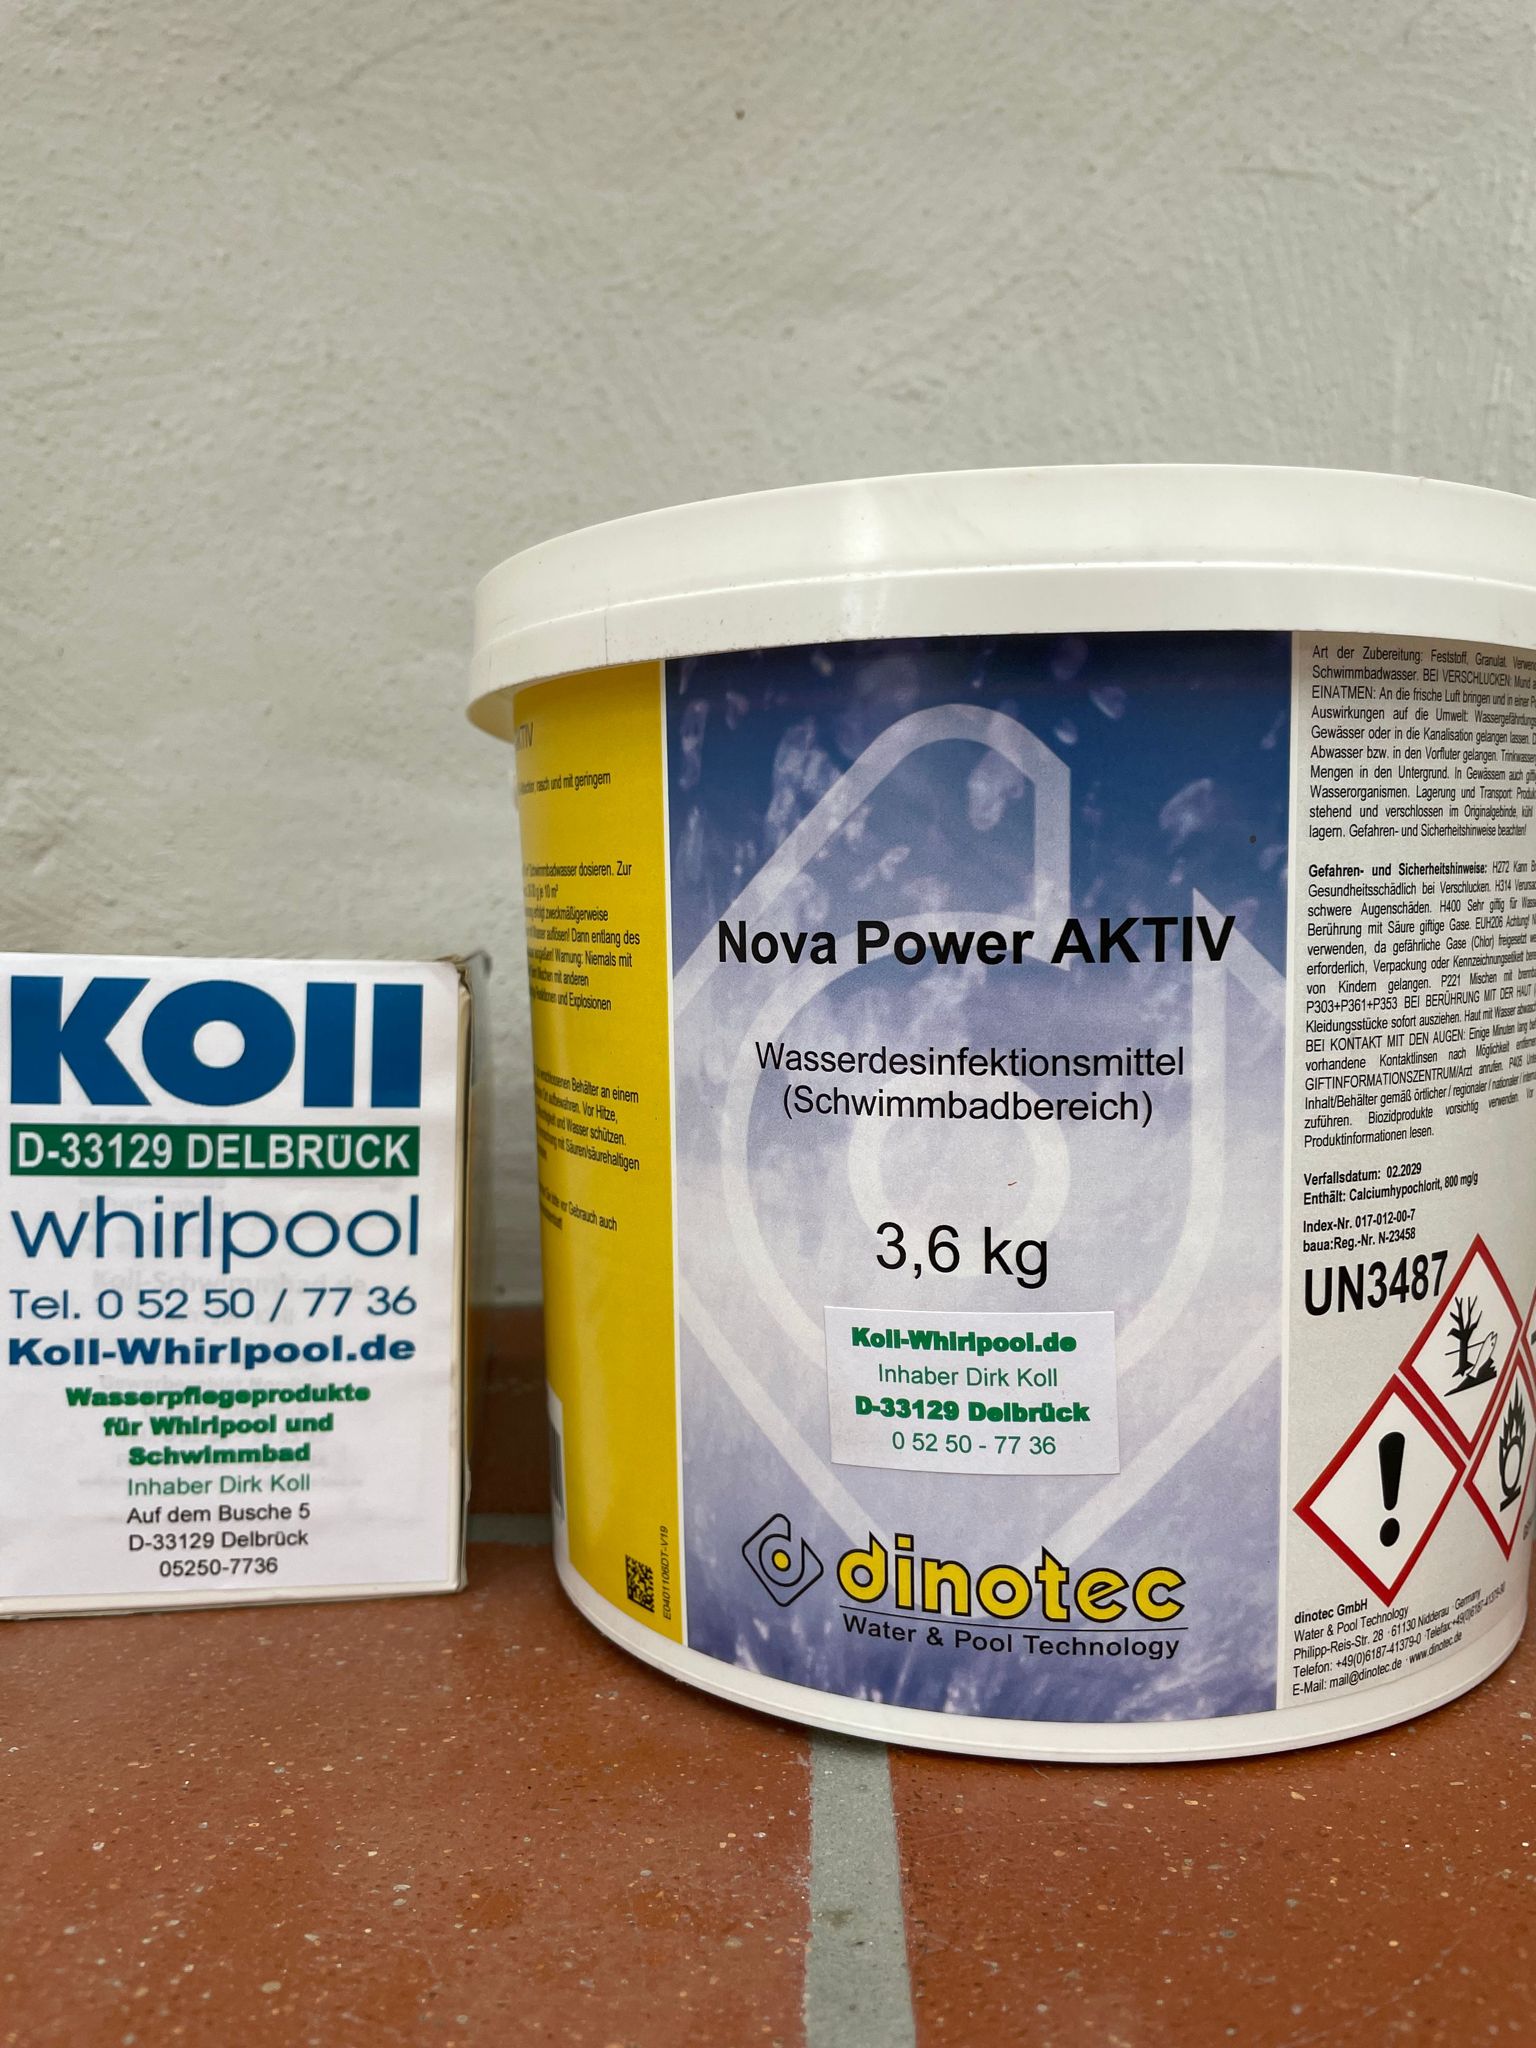 1010-113-00 Nova Power AKTIV desinfektion 3,6 kg Koll-Dinotec